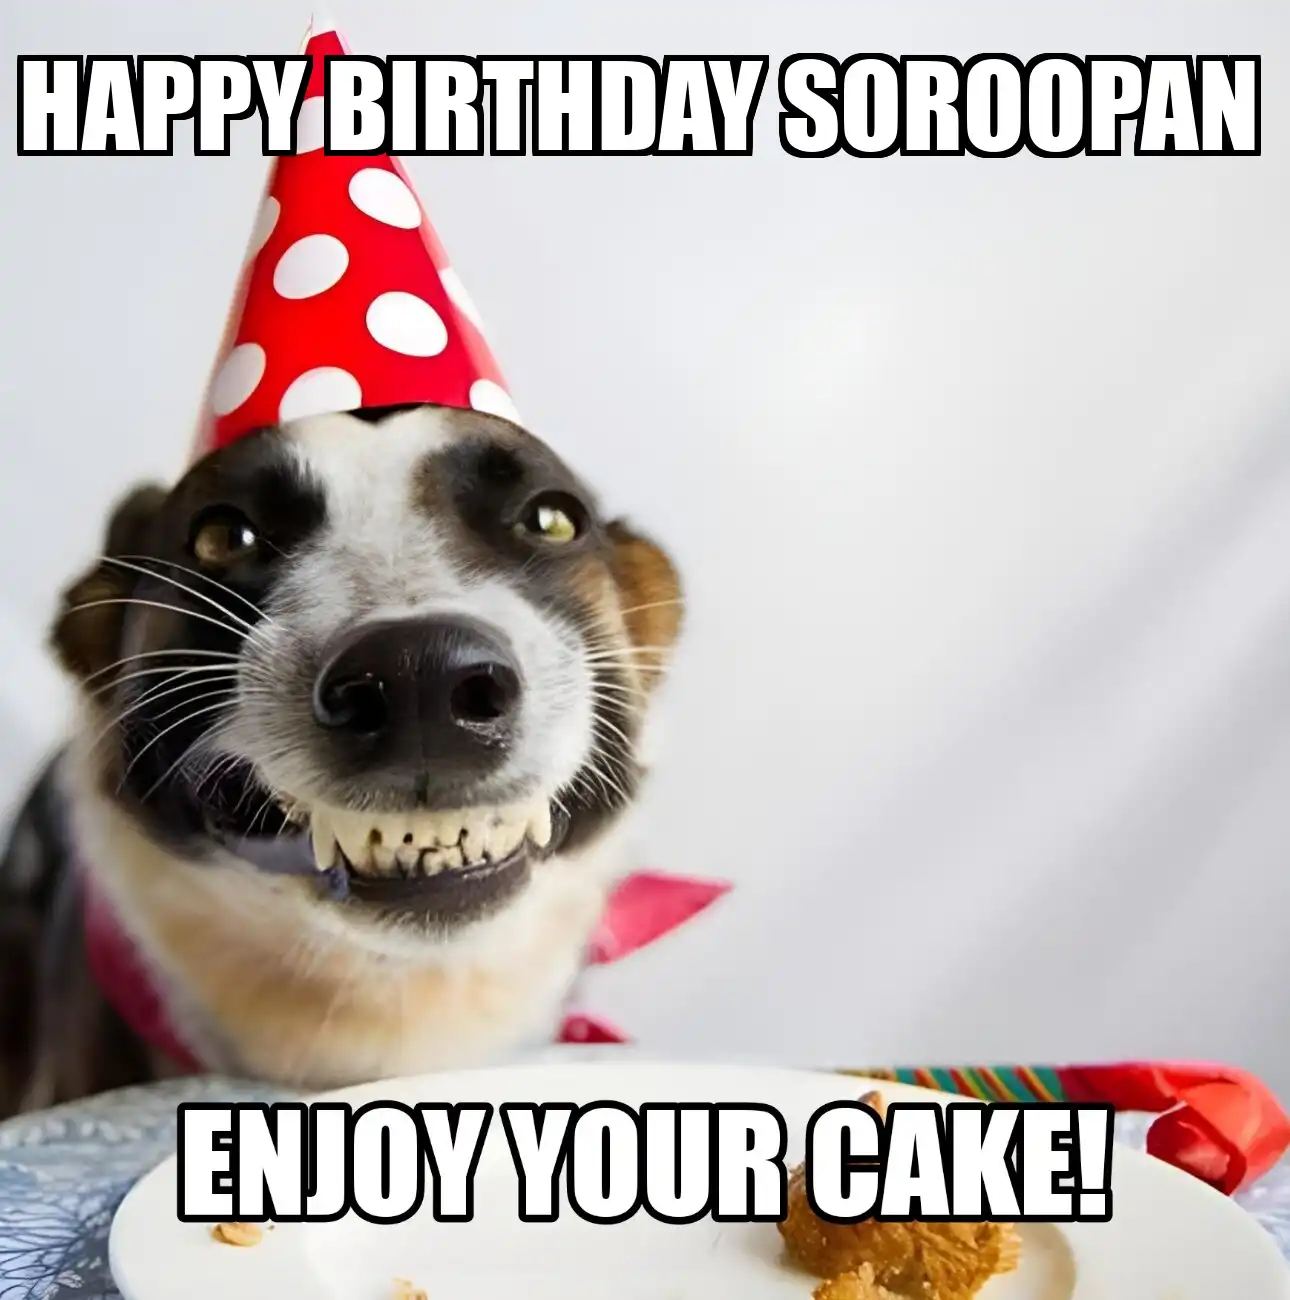 Happy Birthday Soroopan Enjoy Your Cake Dog Meme